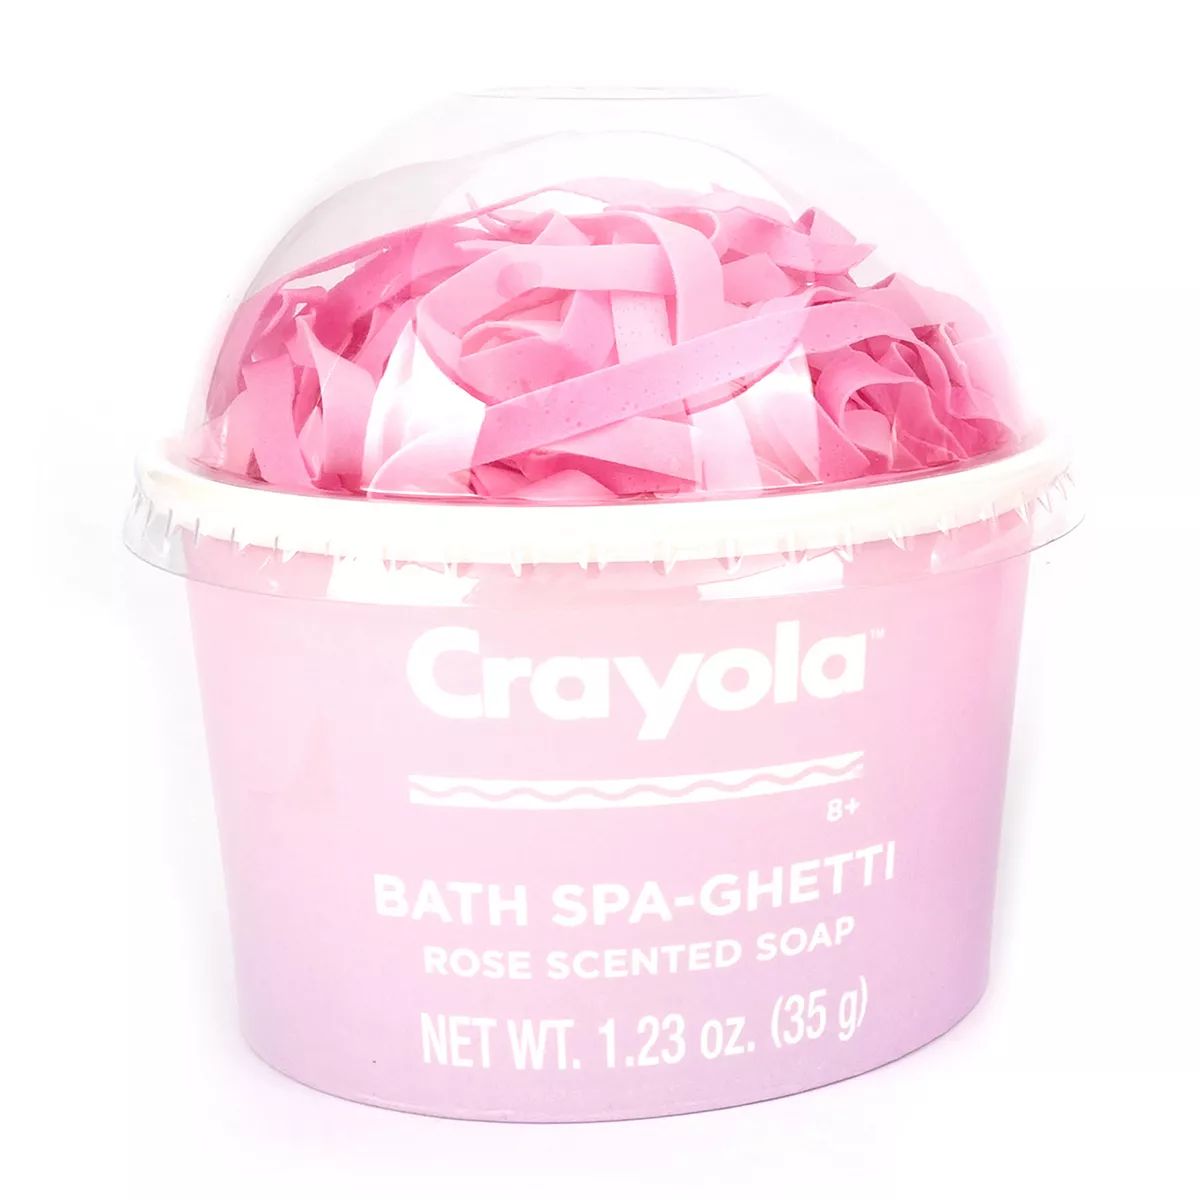 Crayola Bath Spa-Ghetti Soap - Rose | Kohl's